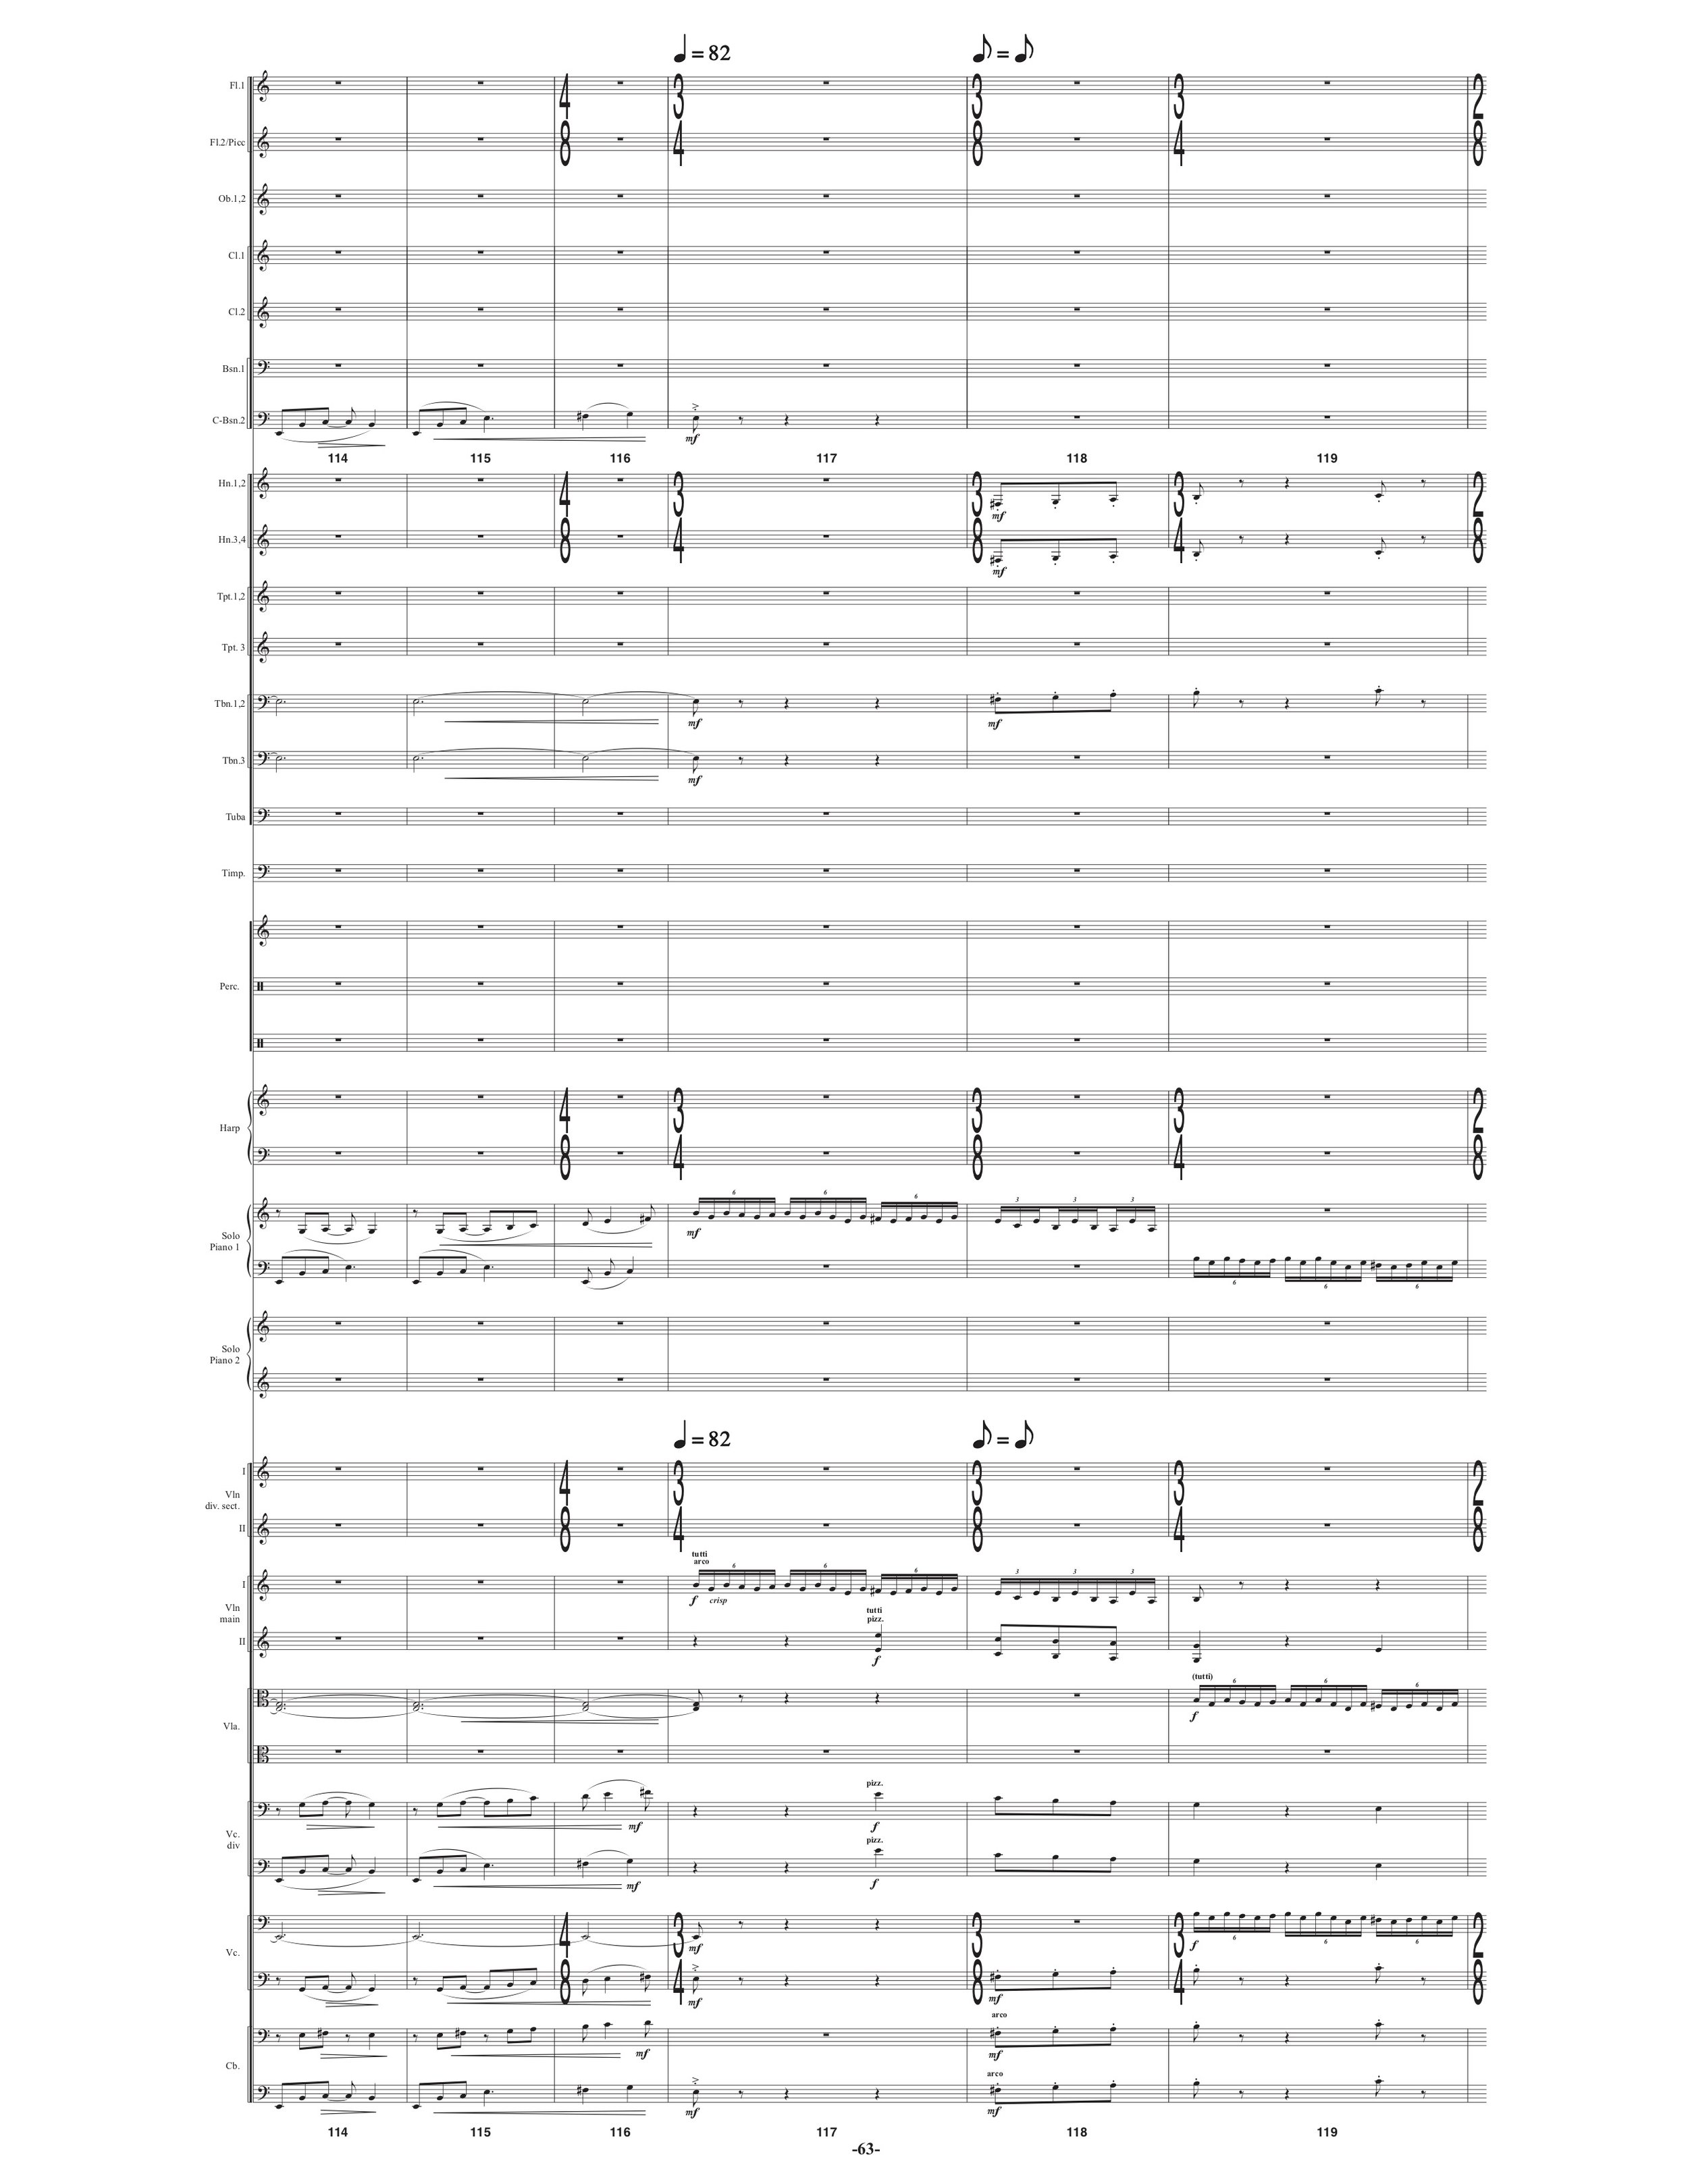 Symphony_Orch & 2 Pianos p68.jpg